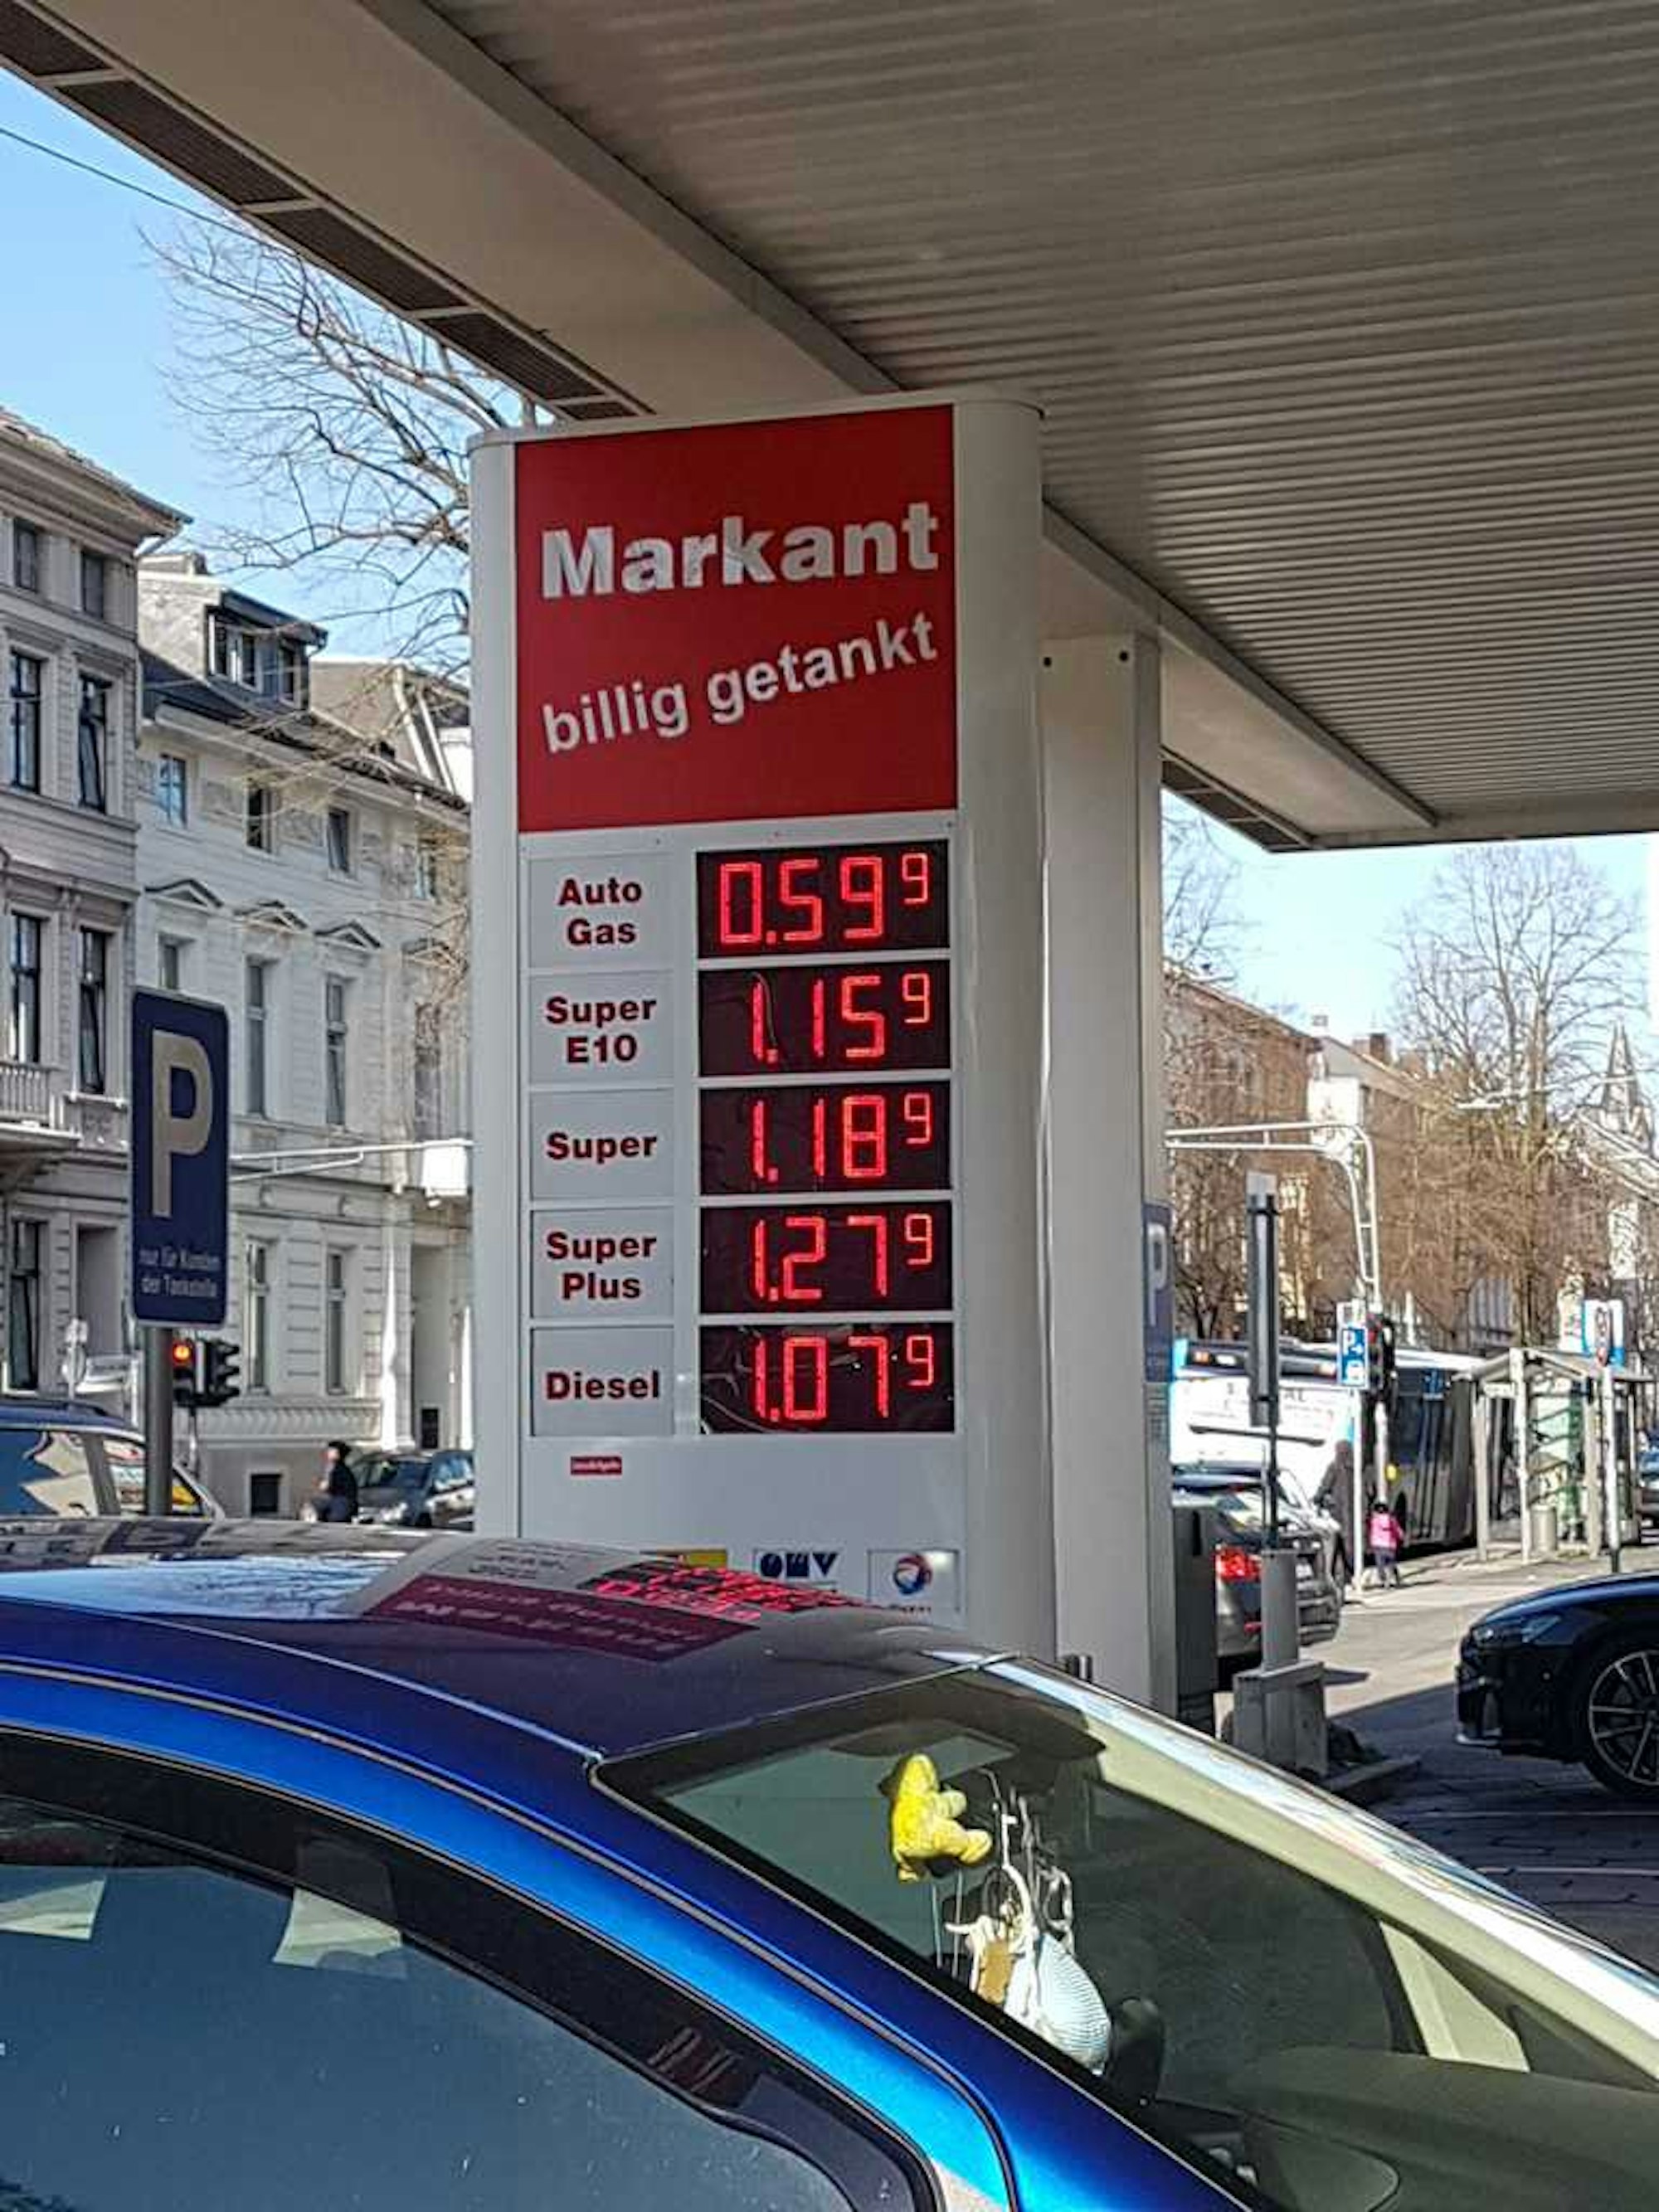 Markant-Tankstelle-Wuppertal-23-März-2020